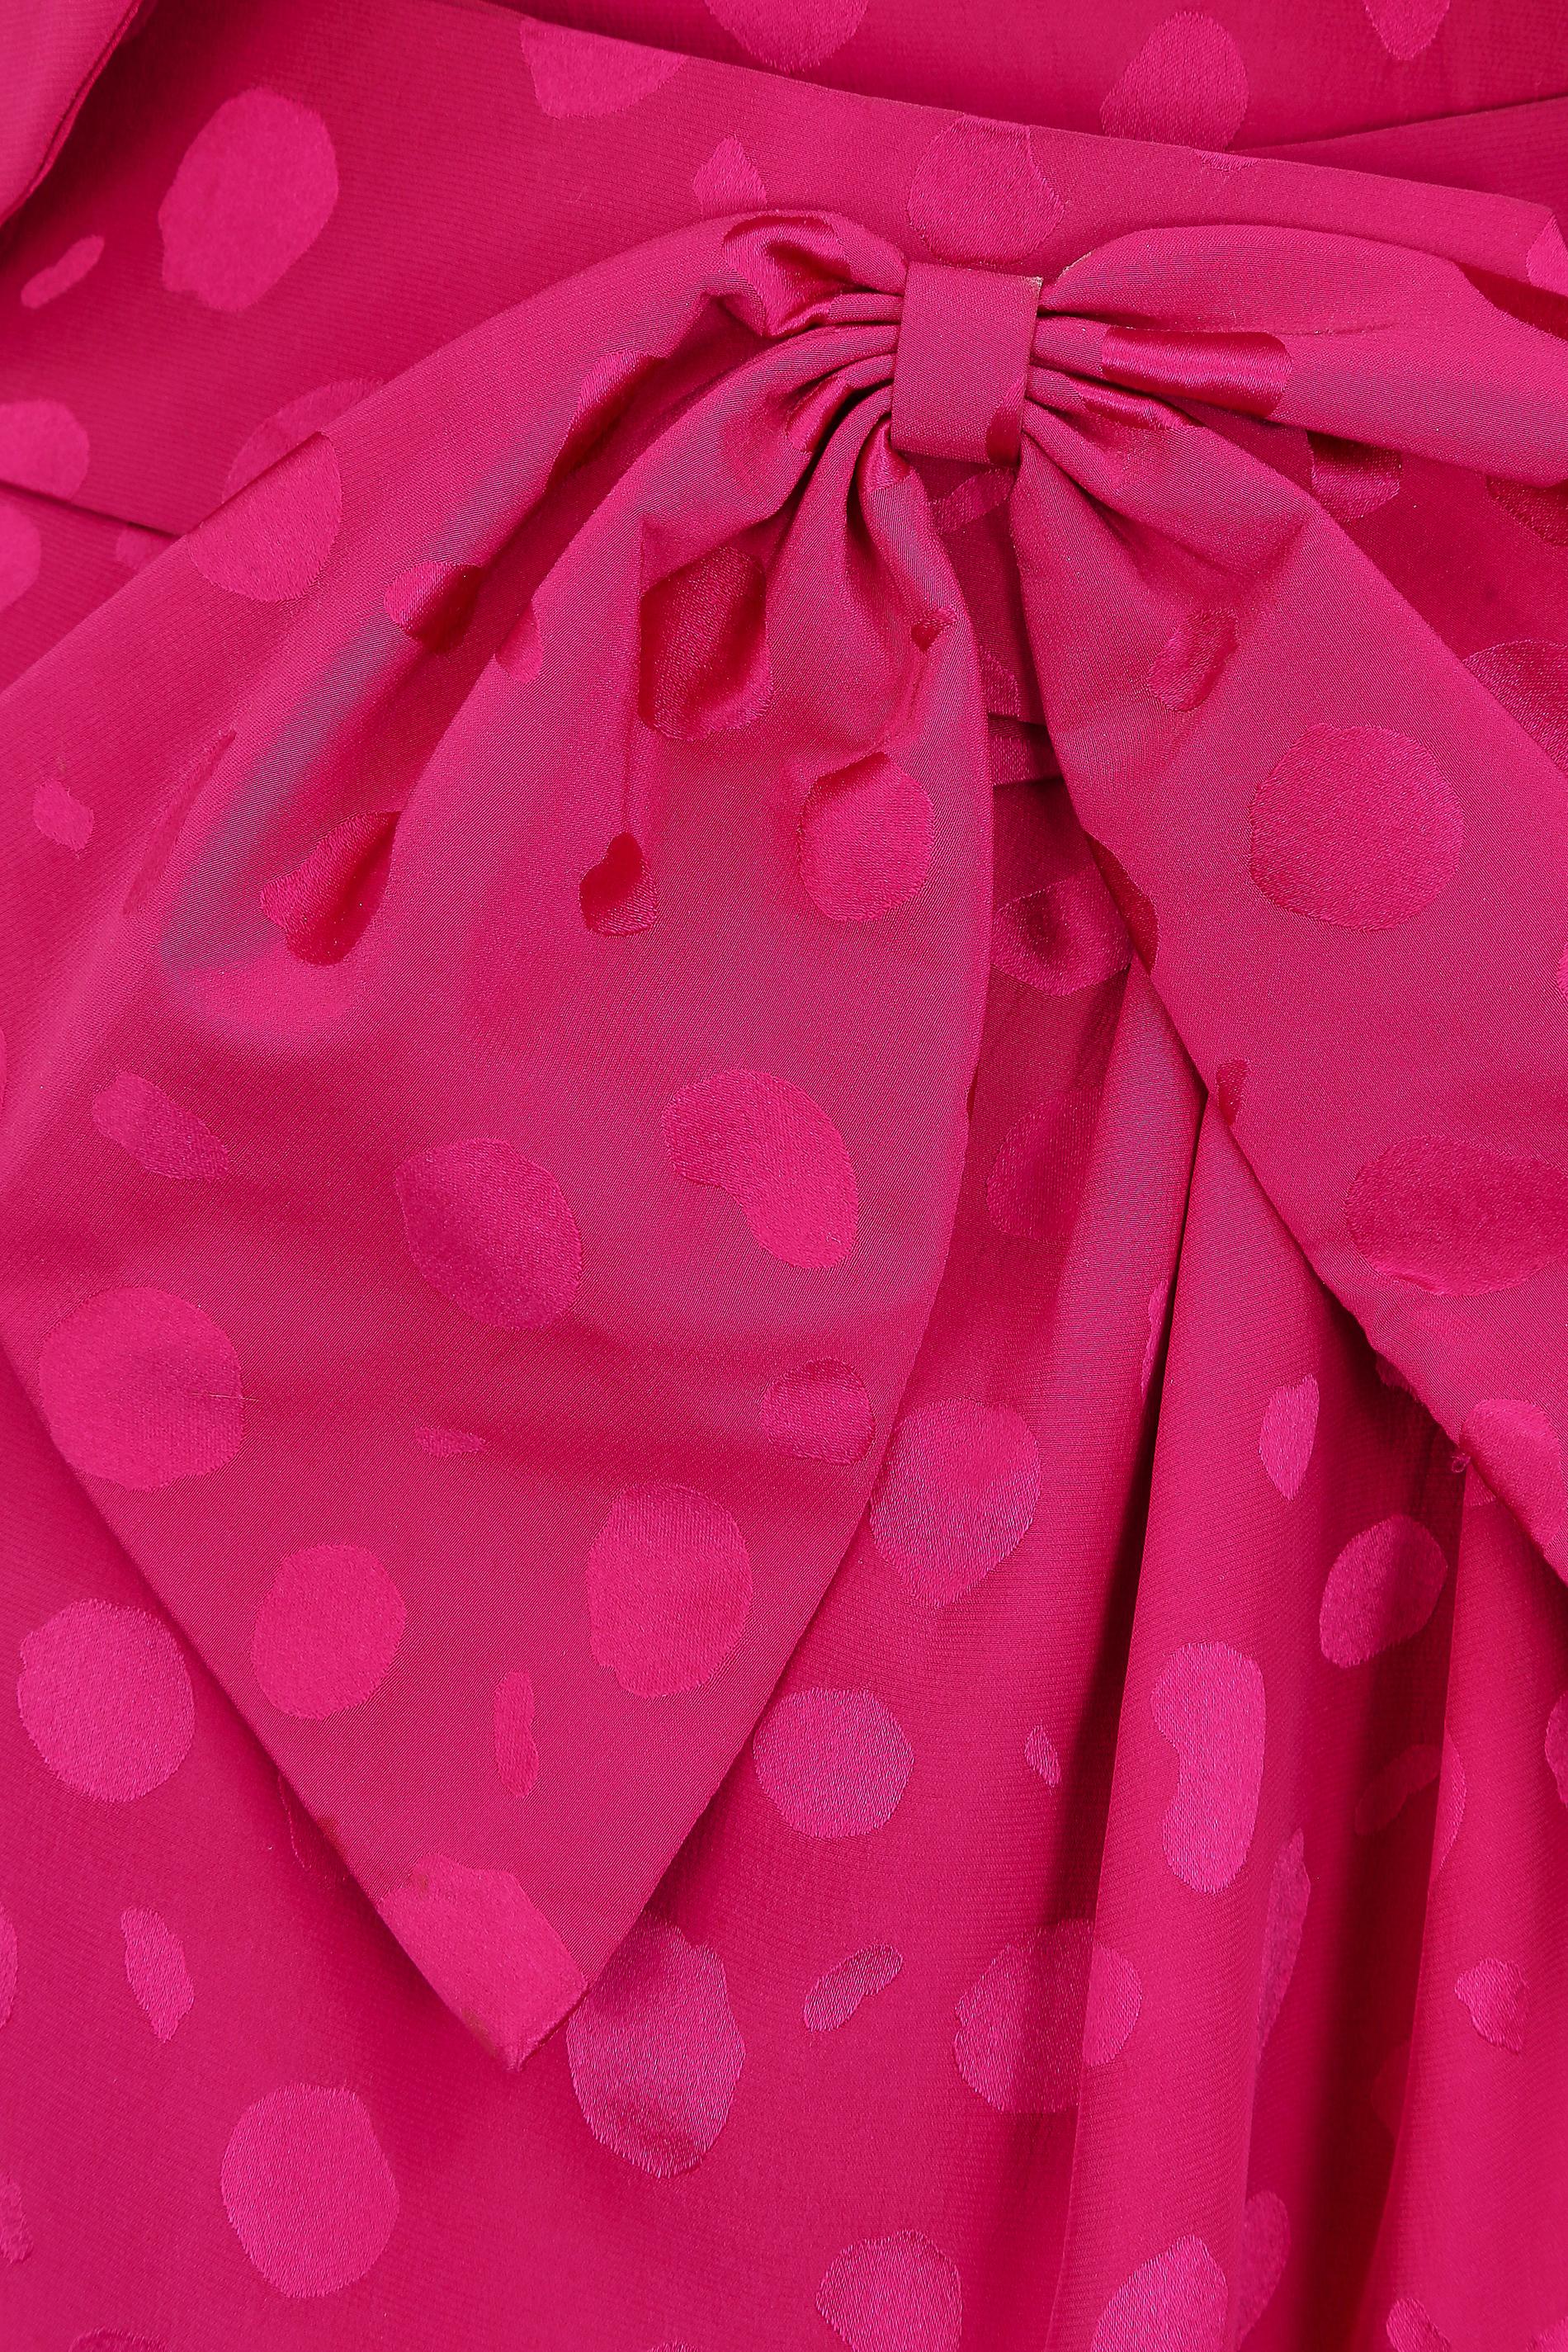 1990s Gail Hoppen Pink Dress Suit with Belt For Sale 2